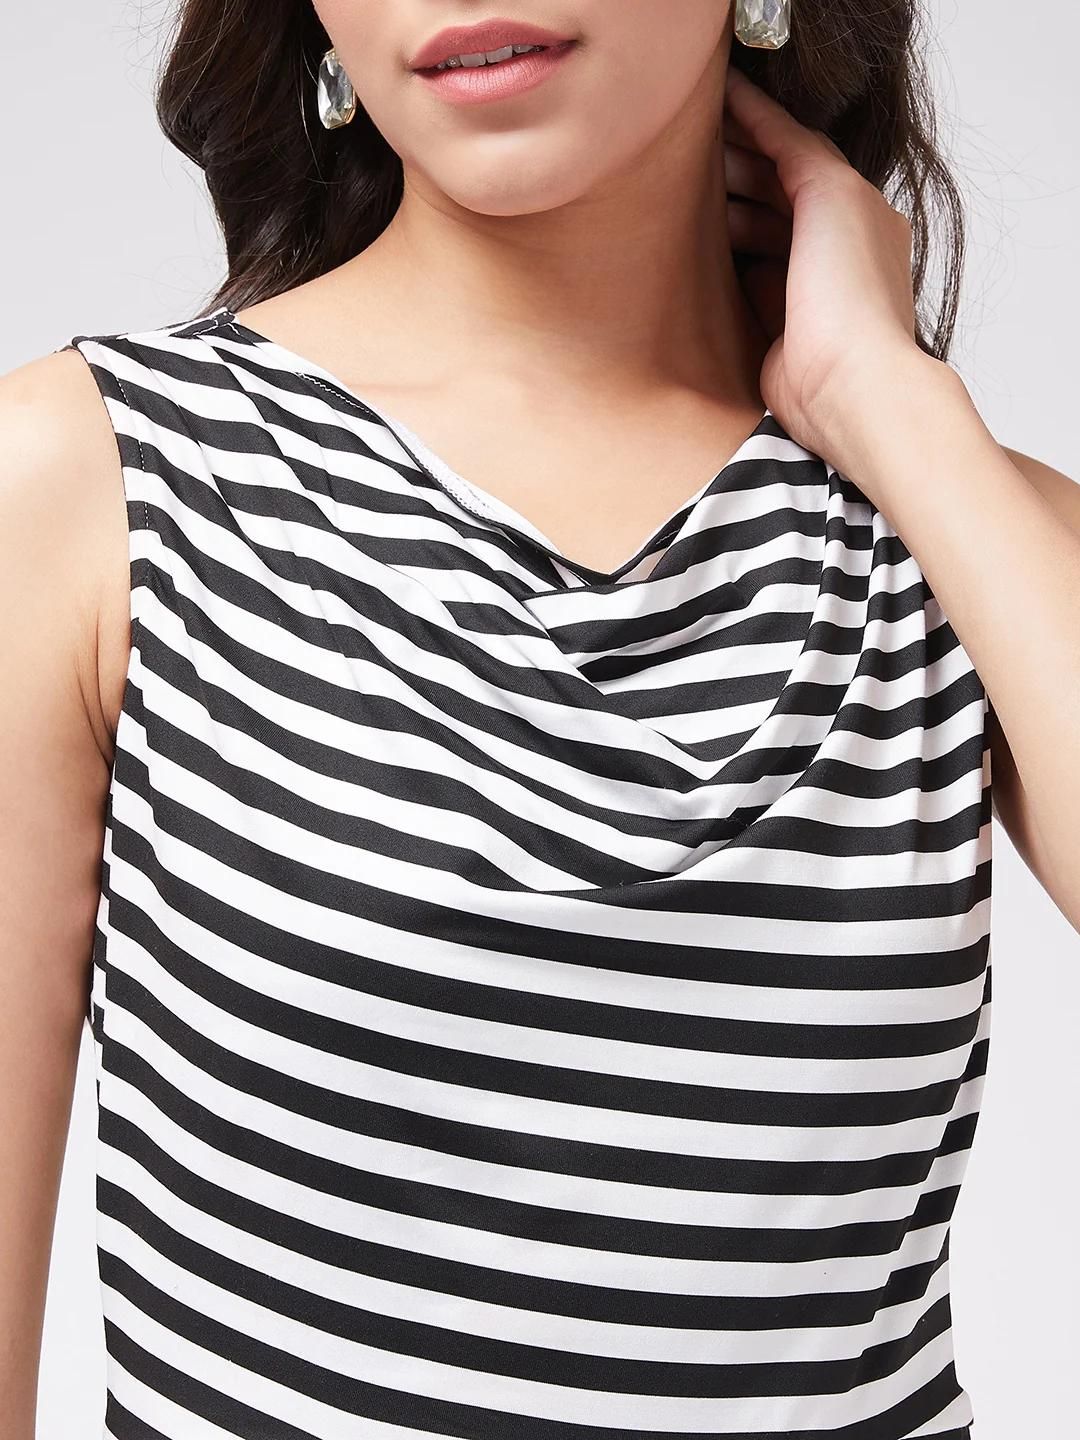 PANNKH Monocromatic Black & White Stripes Cowl Neck Dress